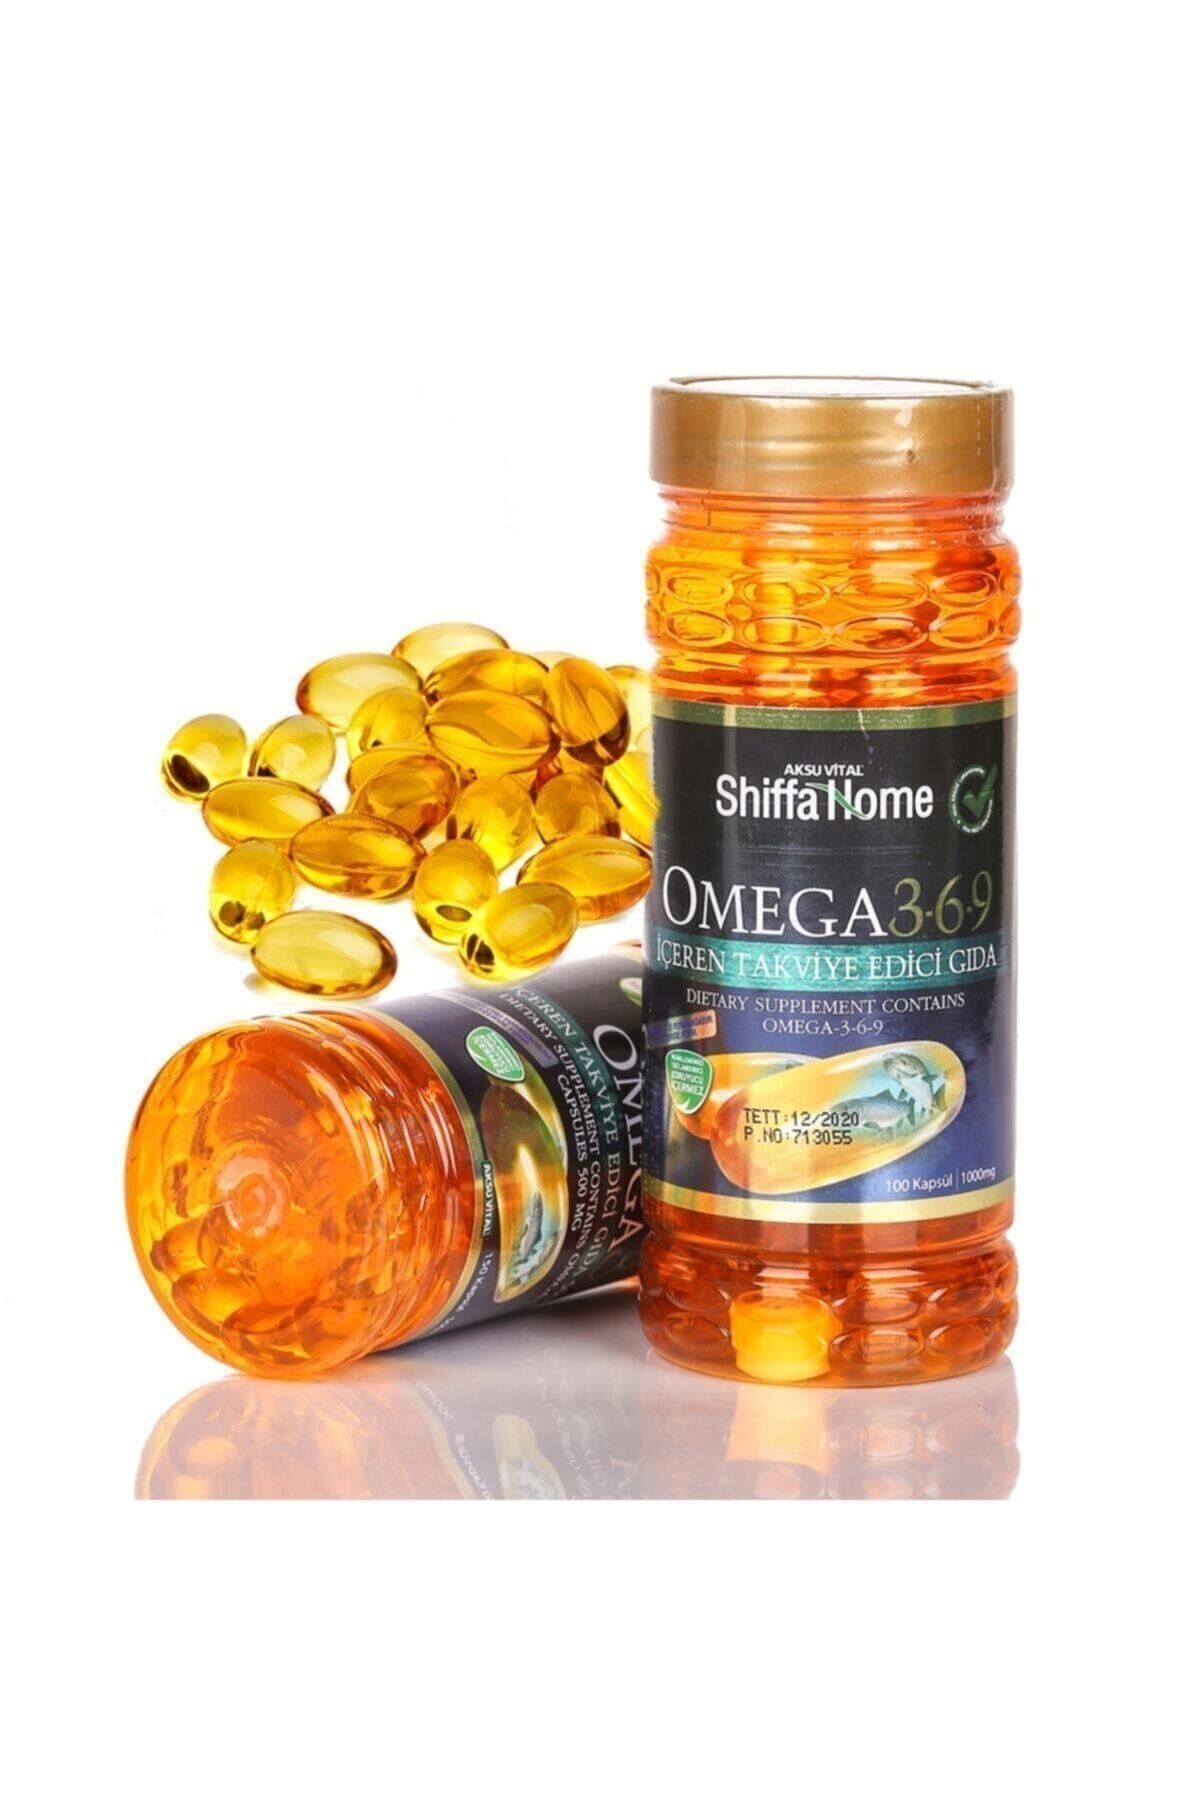 Shiffa Home Omega 3-6-9 Balık Yağı Softjel 1000 Mg 100 Kapsül